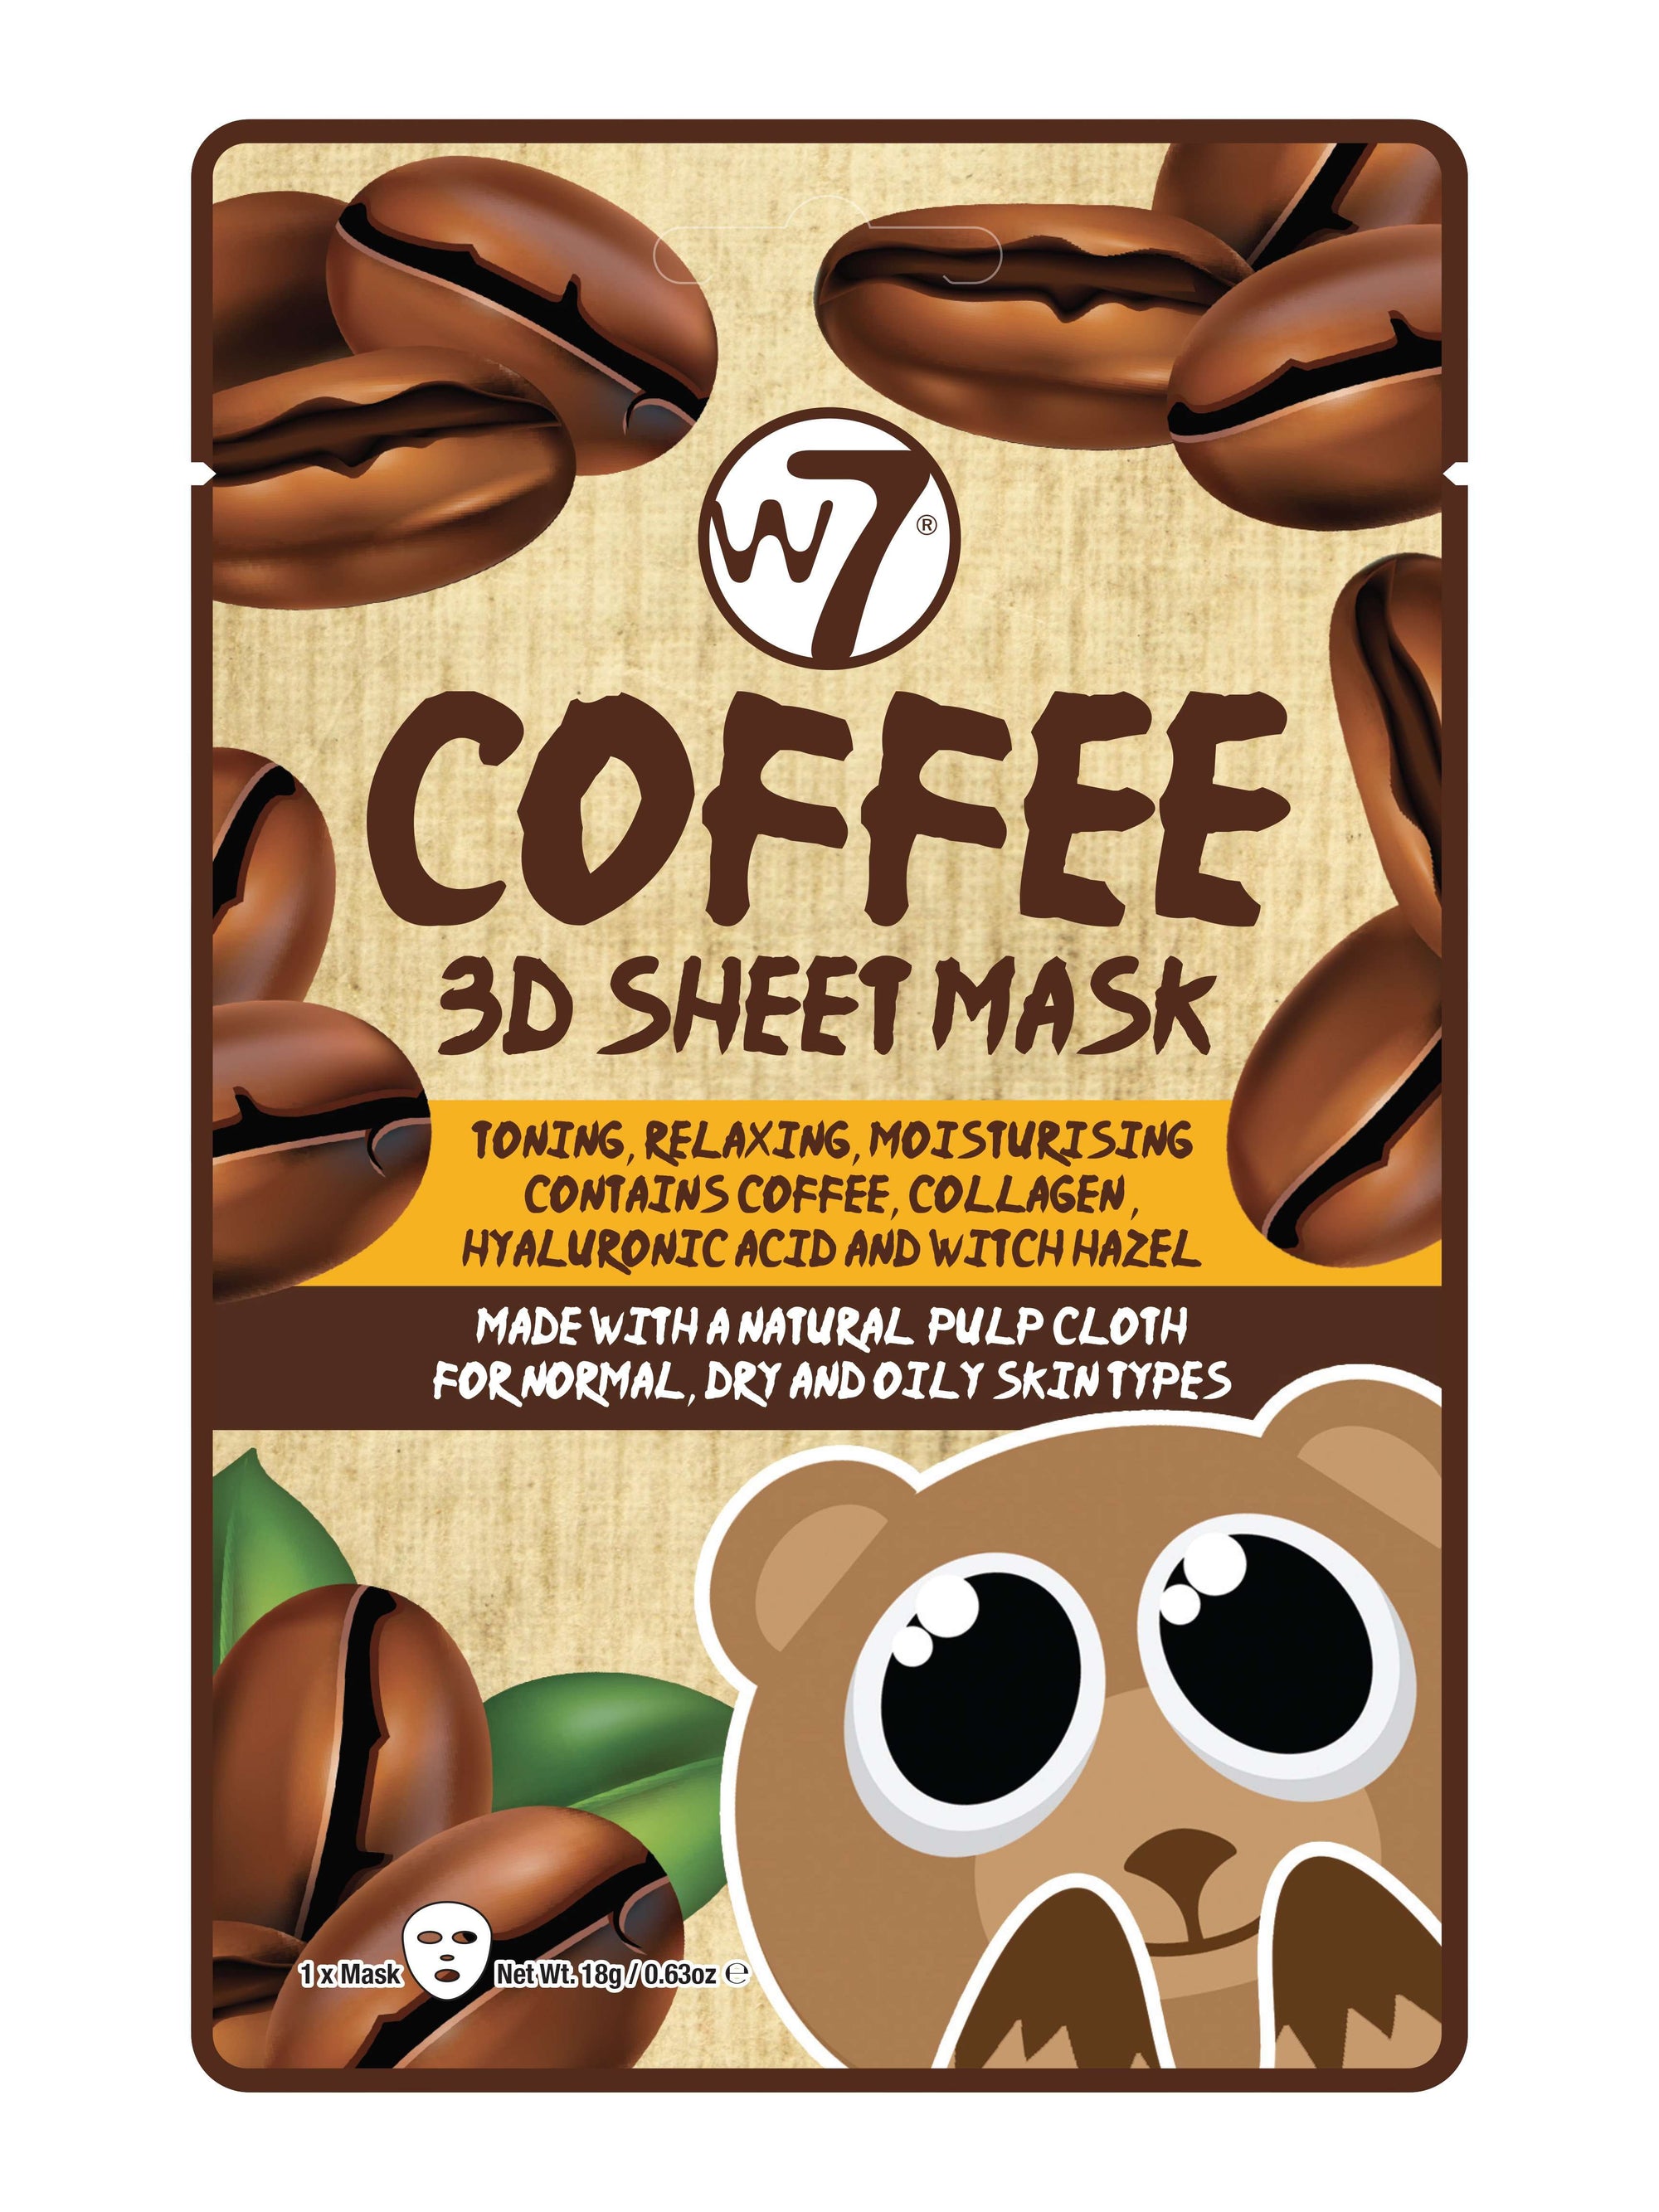 W7 Coffee 3D Sheet Mask